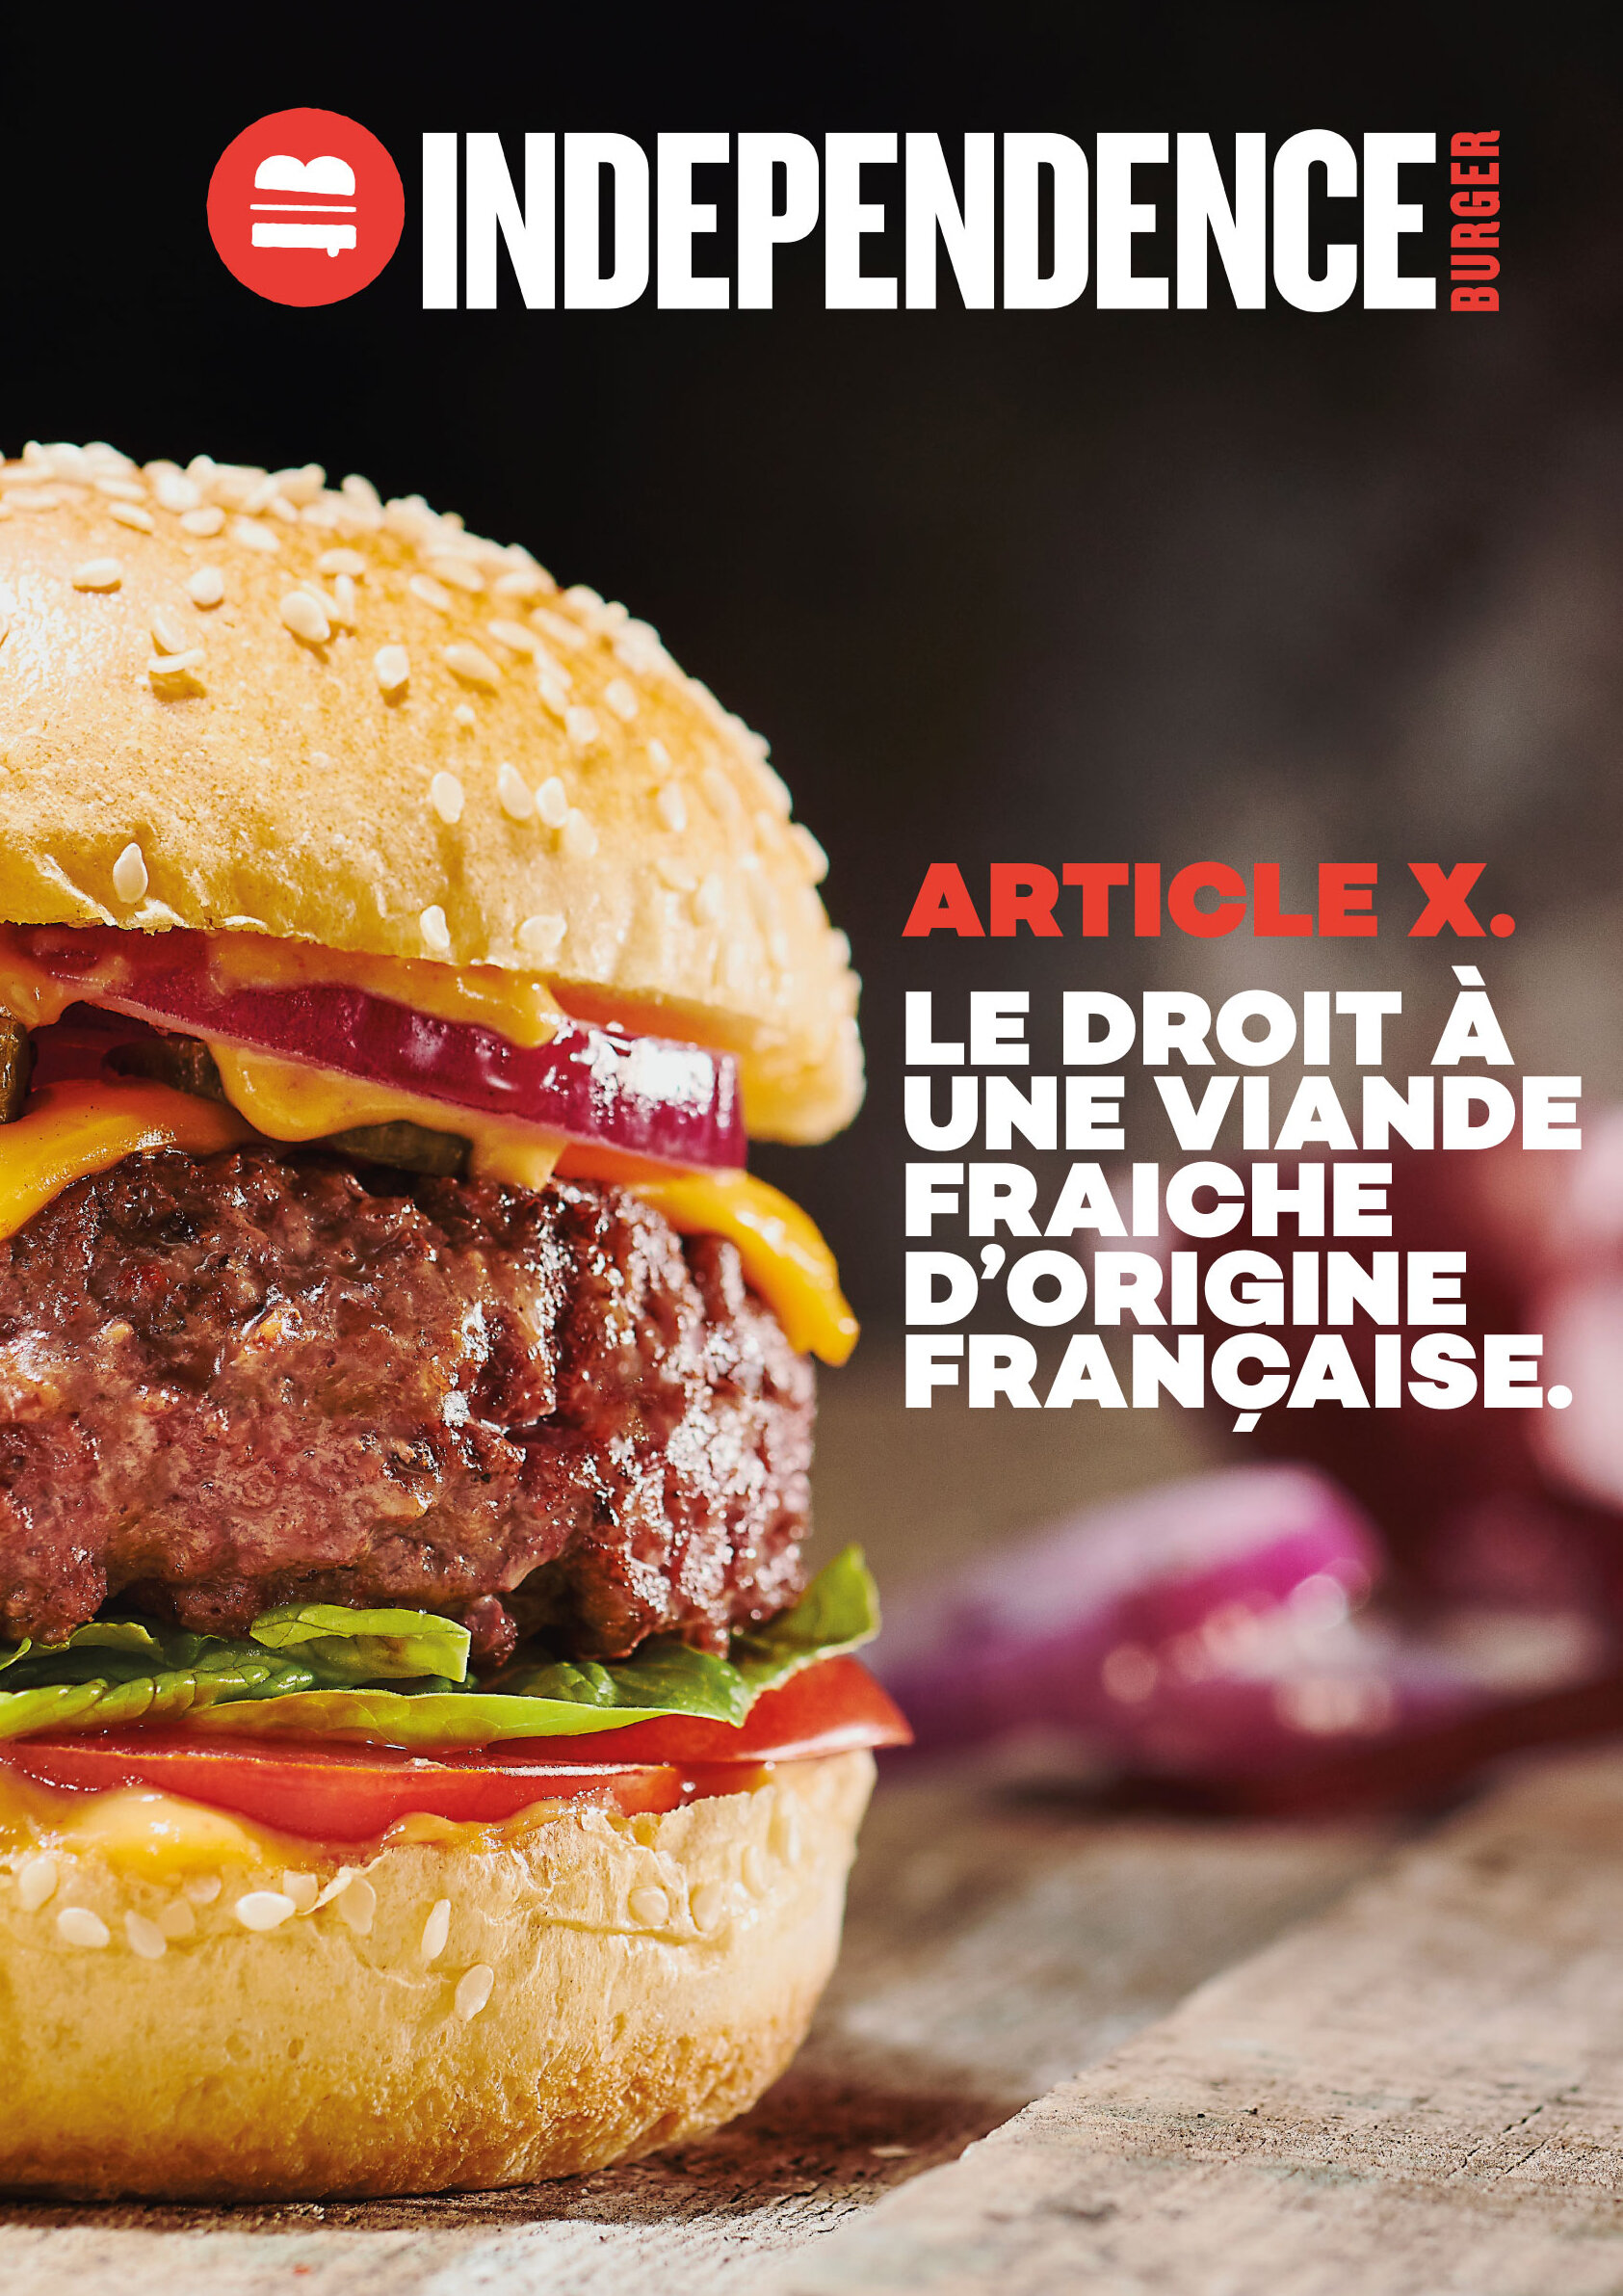 Laurent_Moynat_Valerie_Paumelle_Agent_Photographe_Culinaire_Independence_Burger (2).jpg